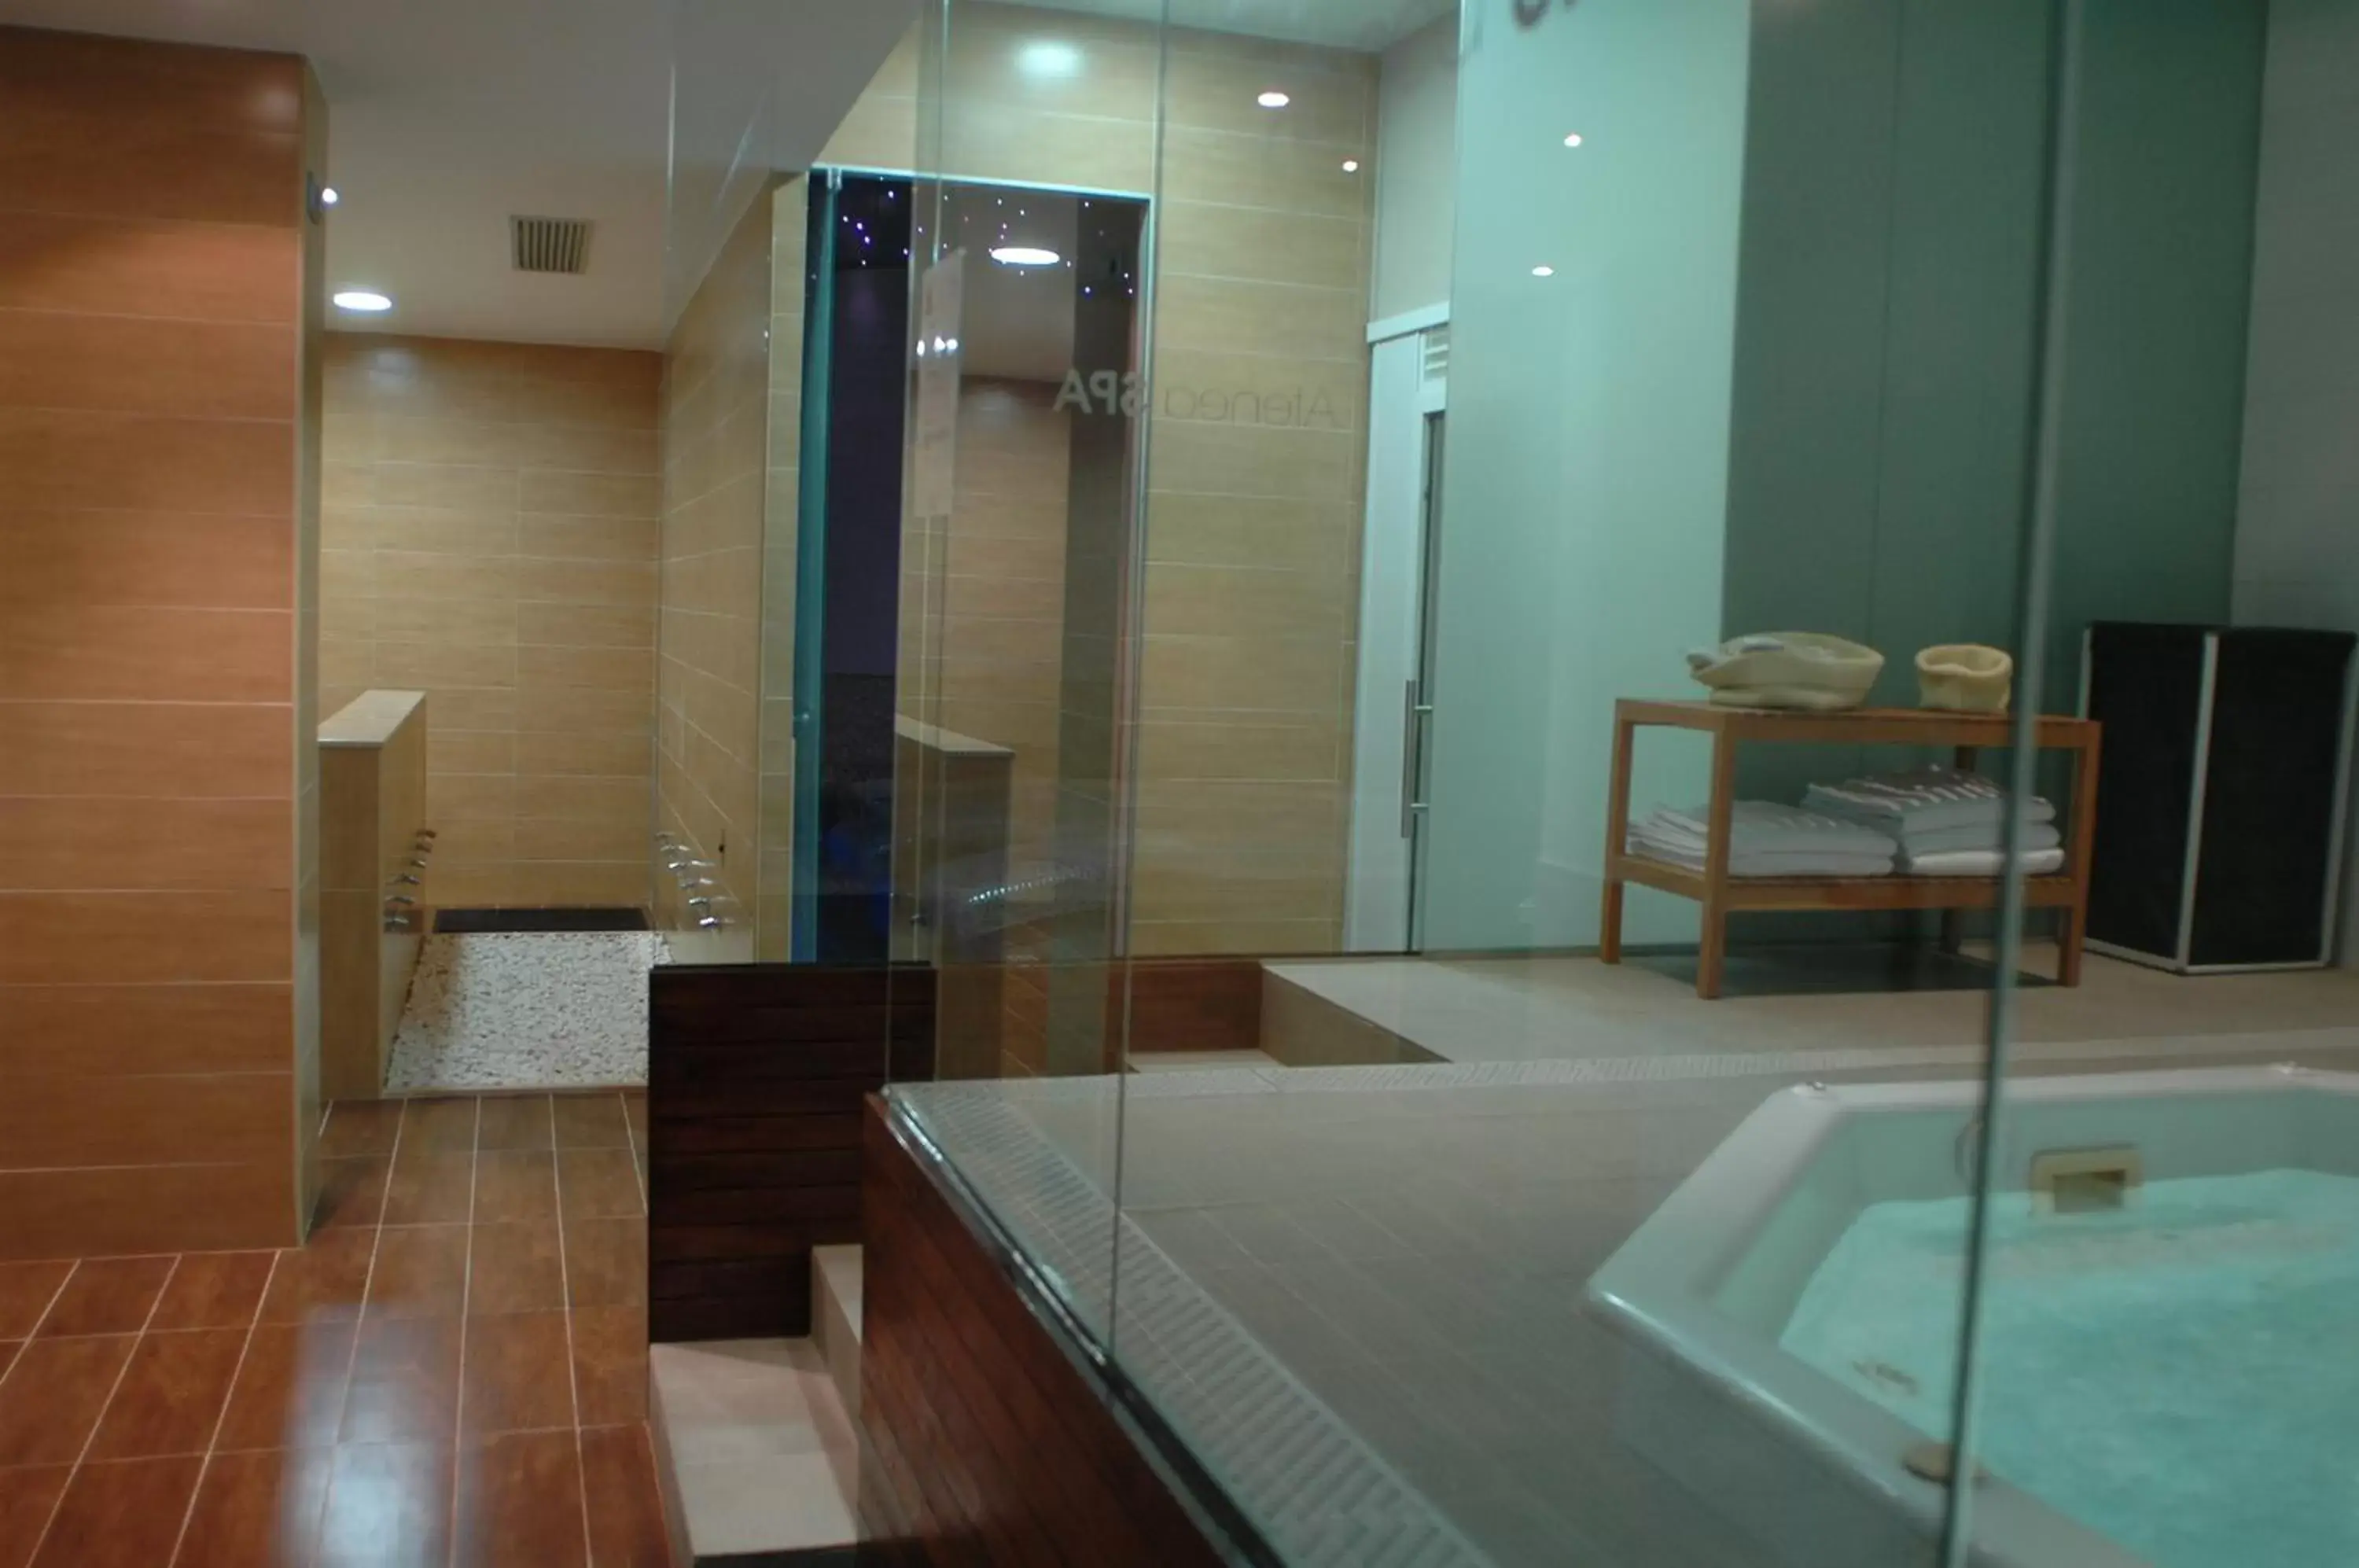 Photo of the whole room, Bathroom in Aparthotel Atenea Valles